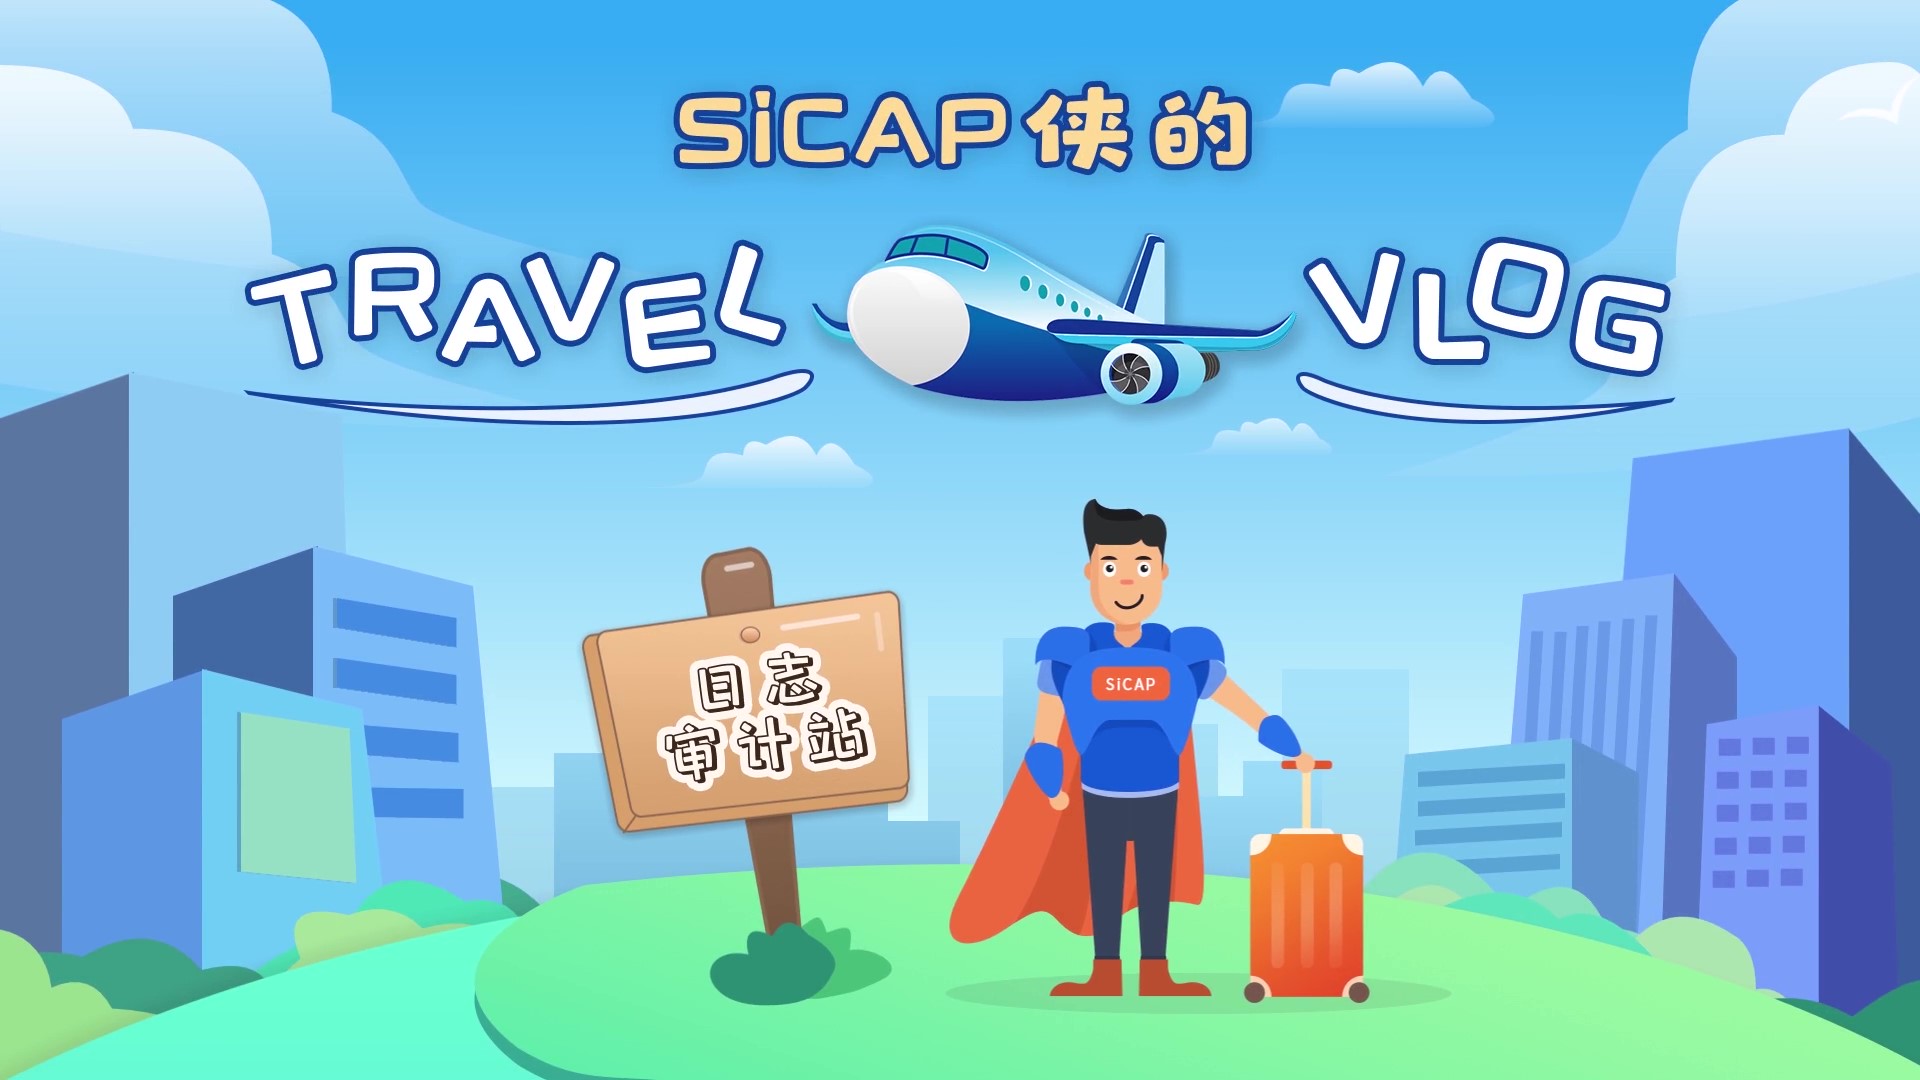 SiCAP俠的Travel Vlog-日志(zhì)審計站